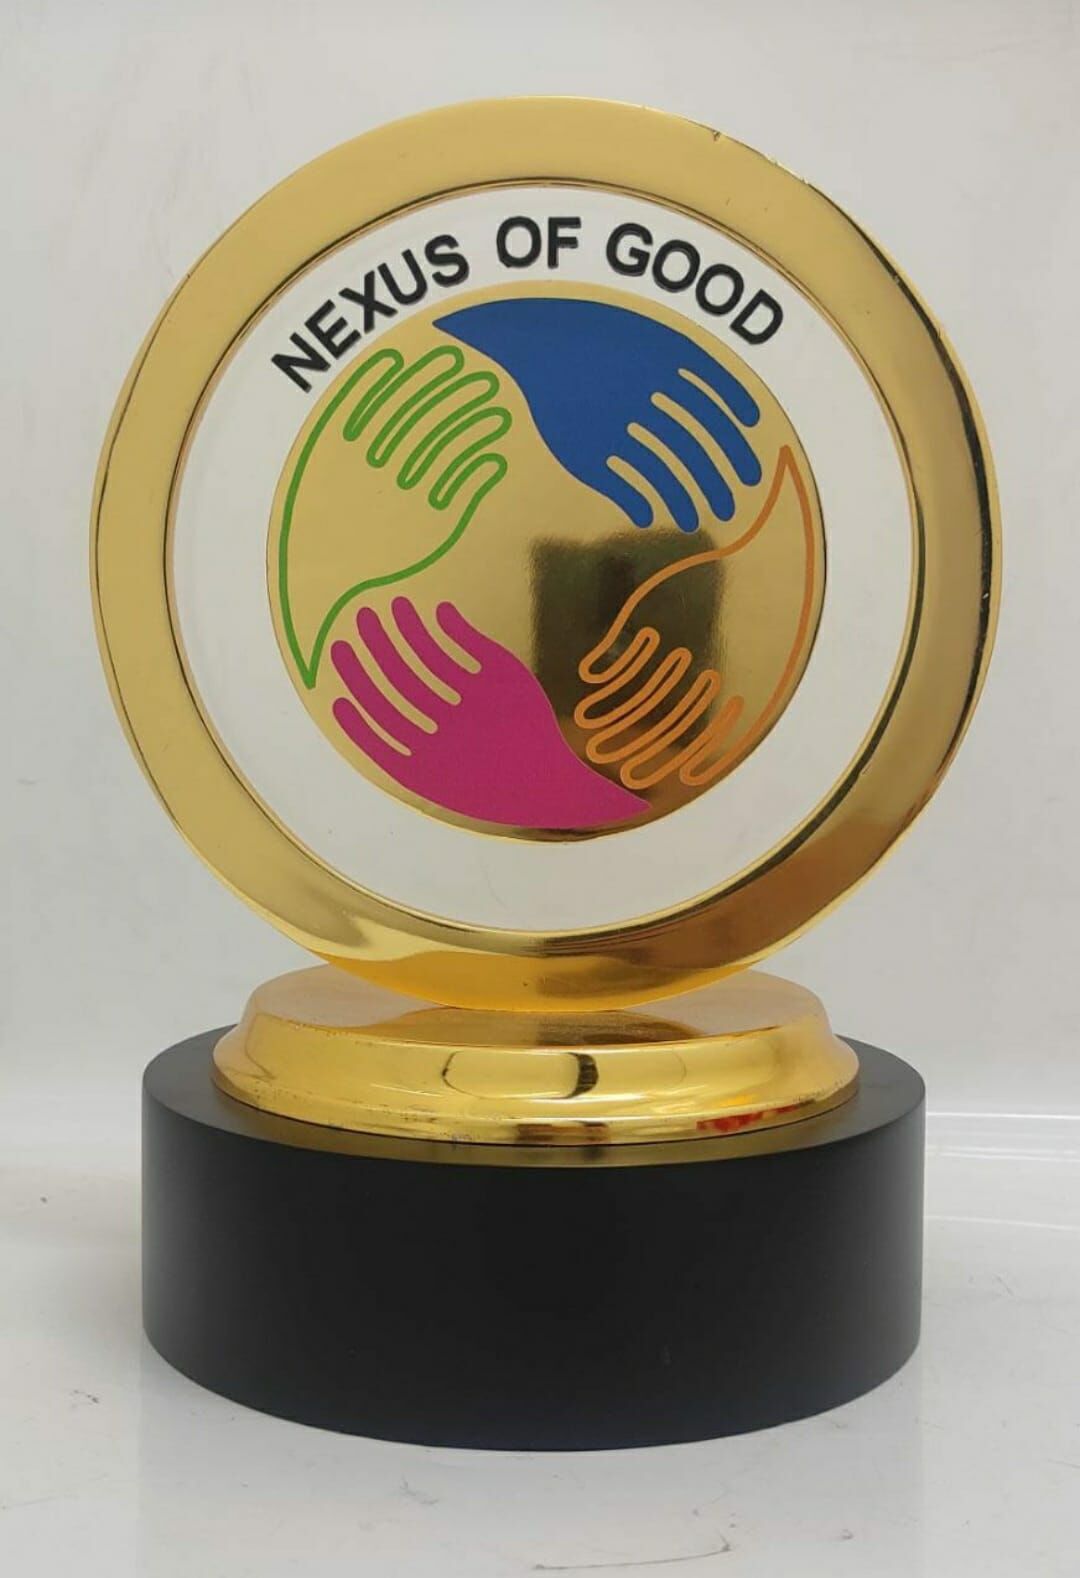 Nexus of Good: Rewarding the performers